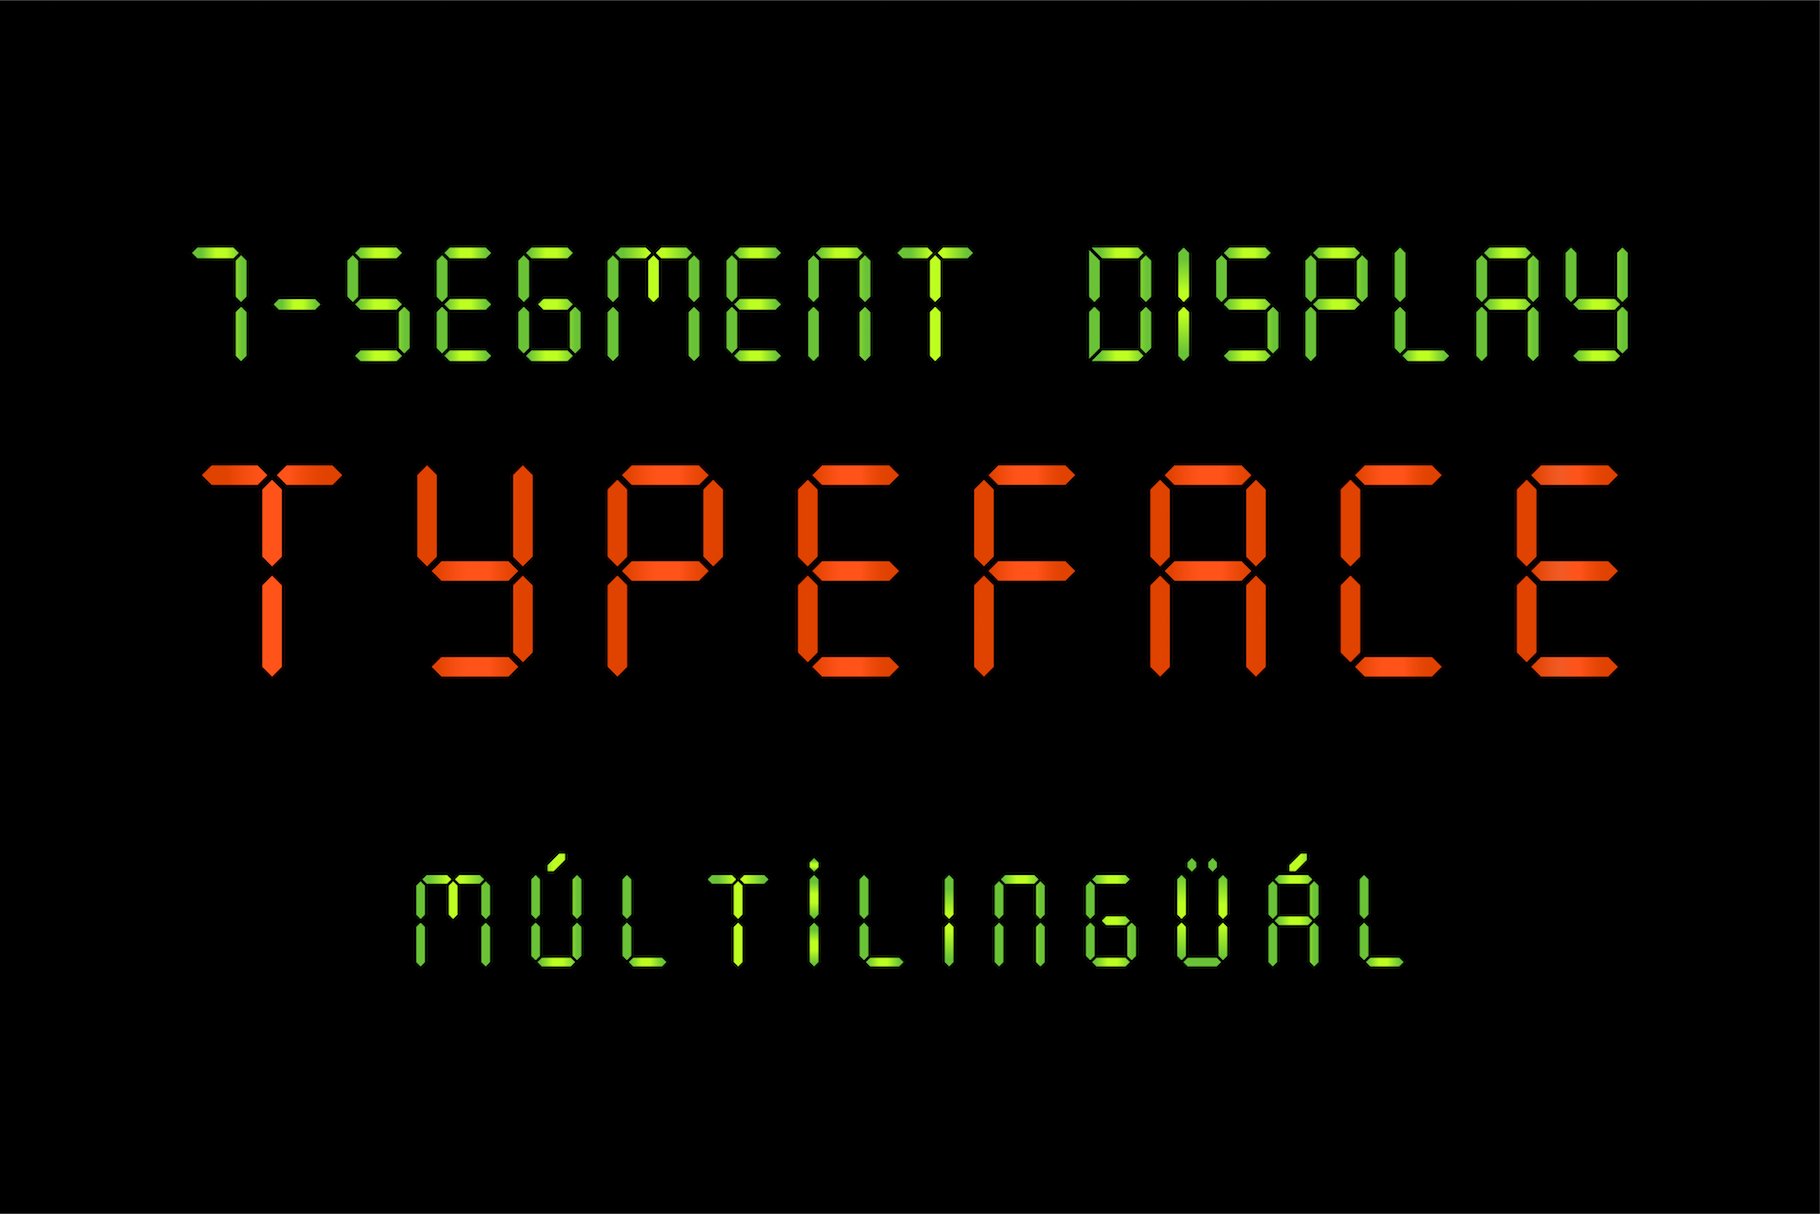 7 Segment Display Font cover image.